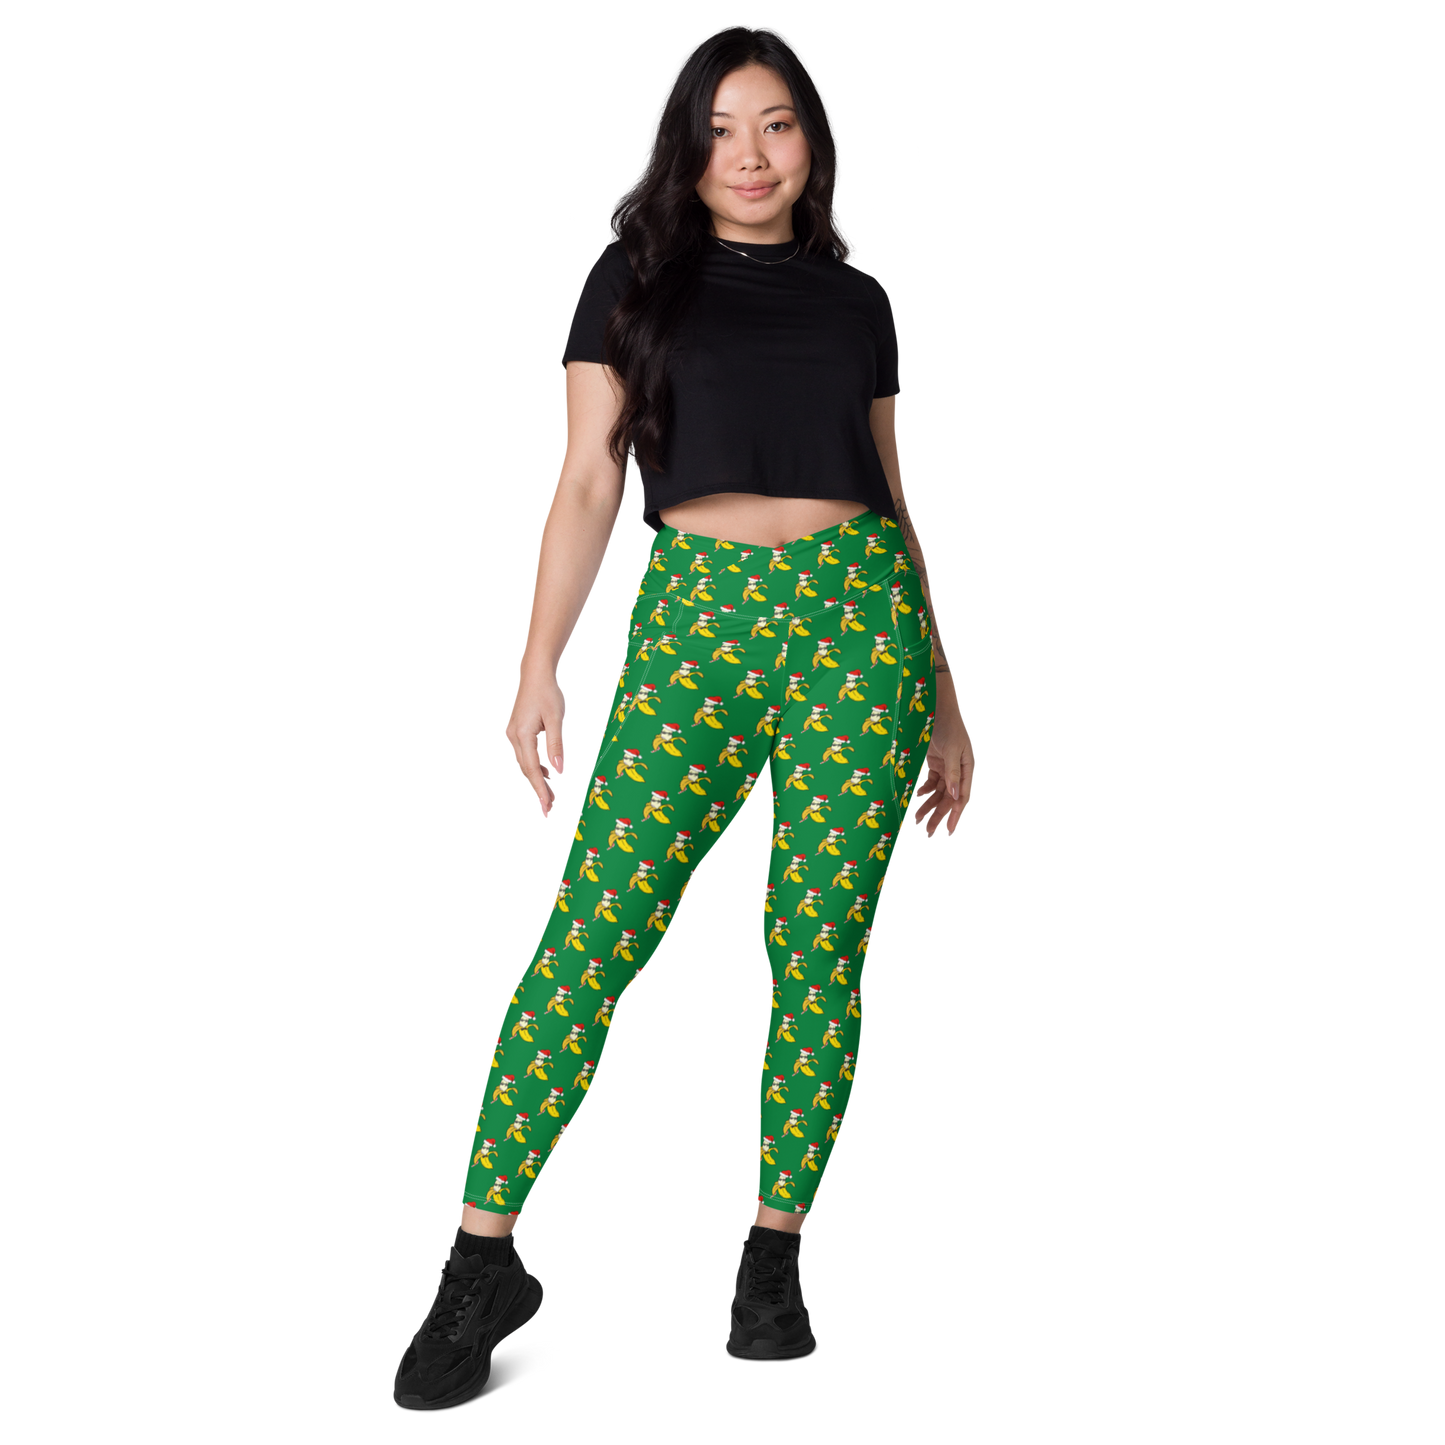 Jolly Green Banana Crossover leggings with pockets